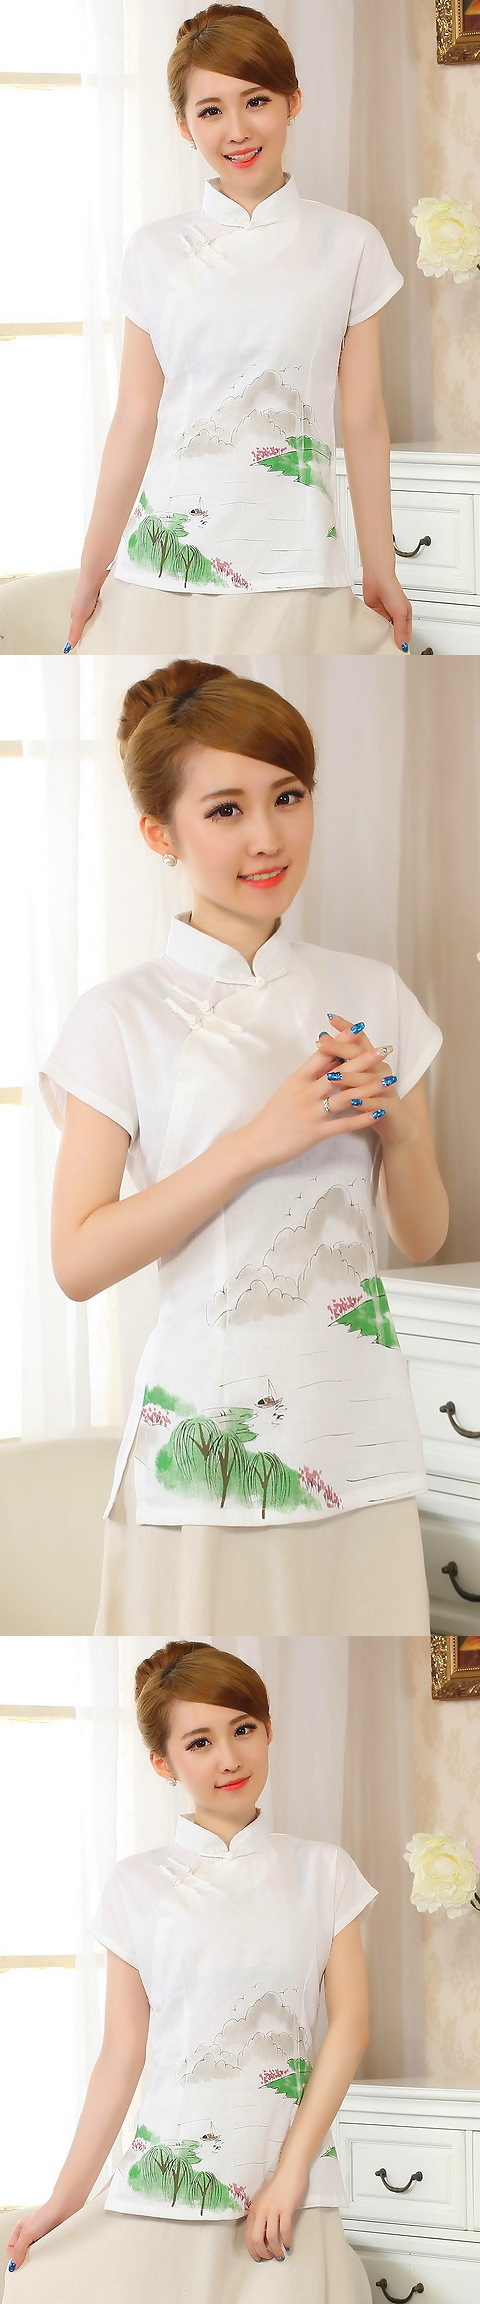 Hand-Painting Cotton Linen Short-sleeve Blouse (RM)